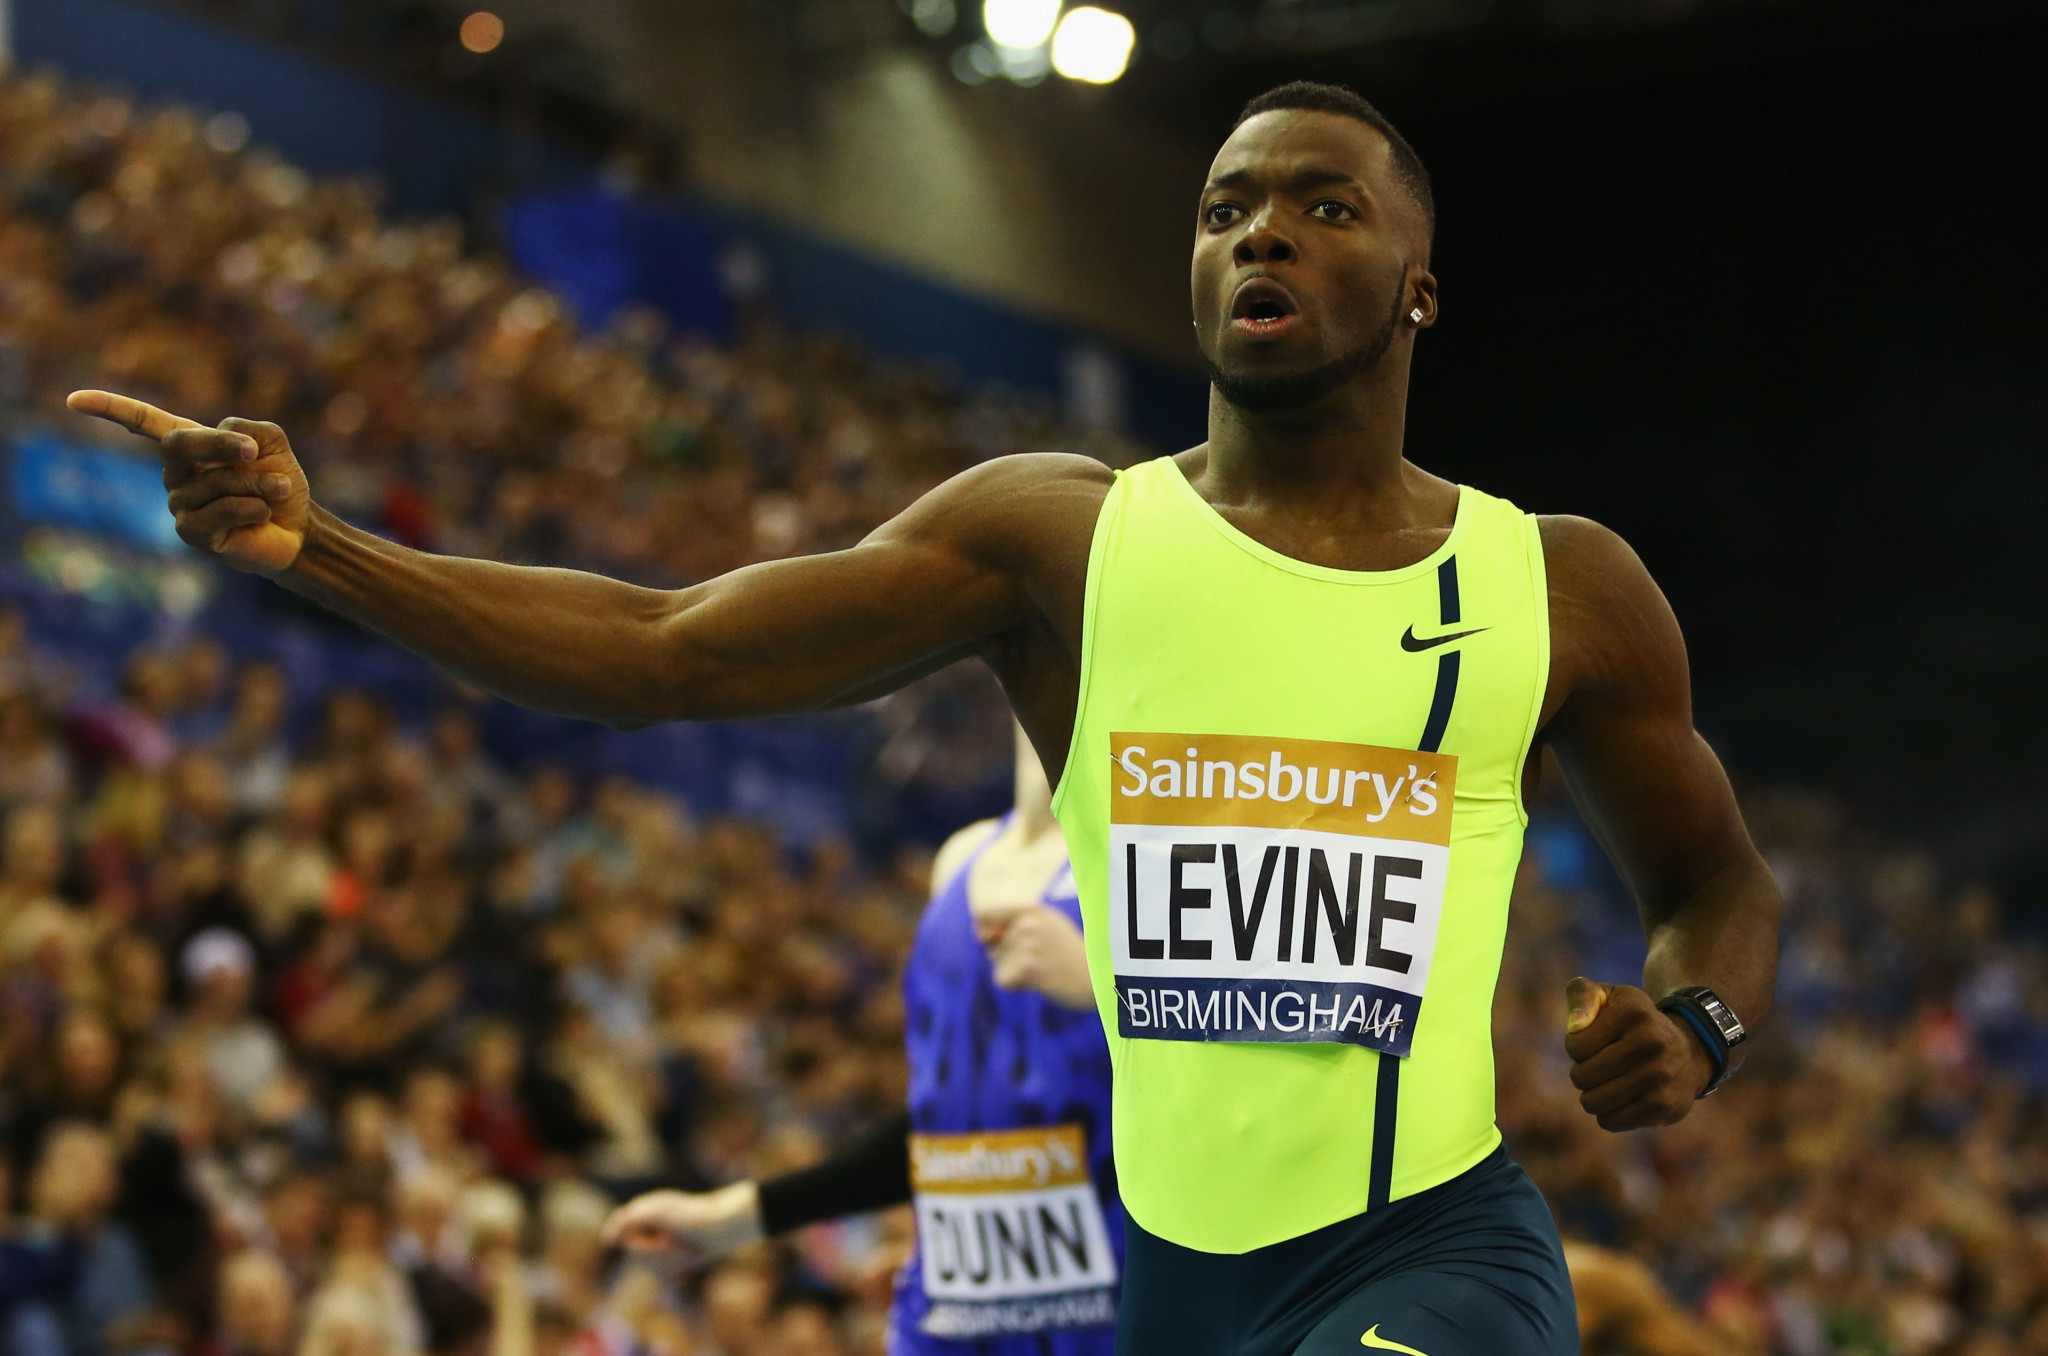 British sprinter Levine provisionally suspended amid doping case